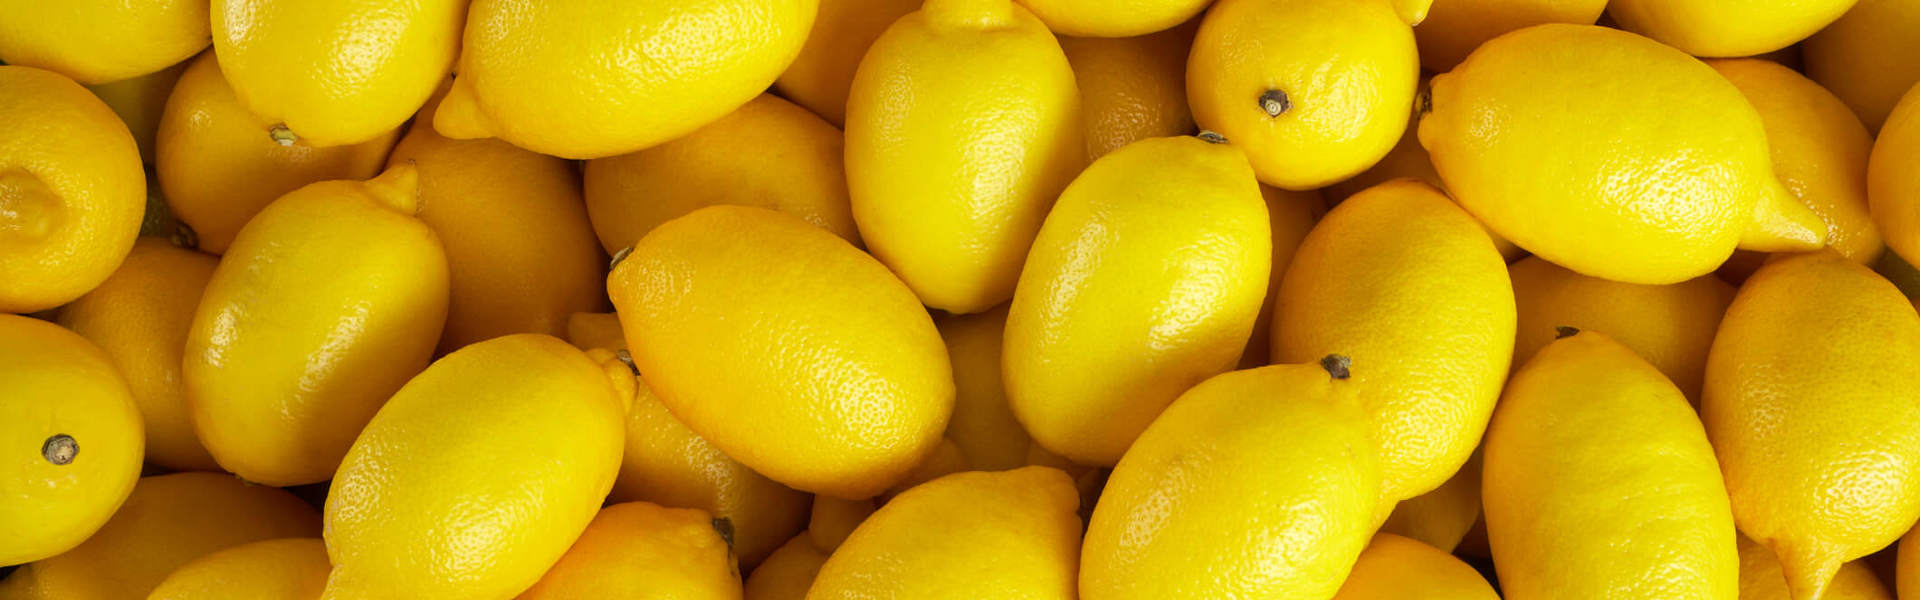 a pile of bright yellow lemons